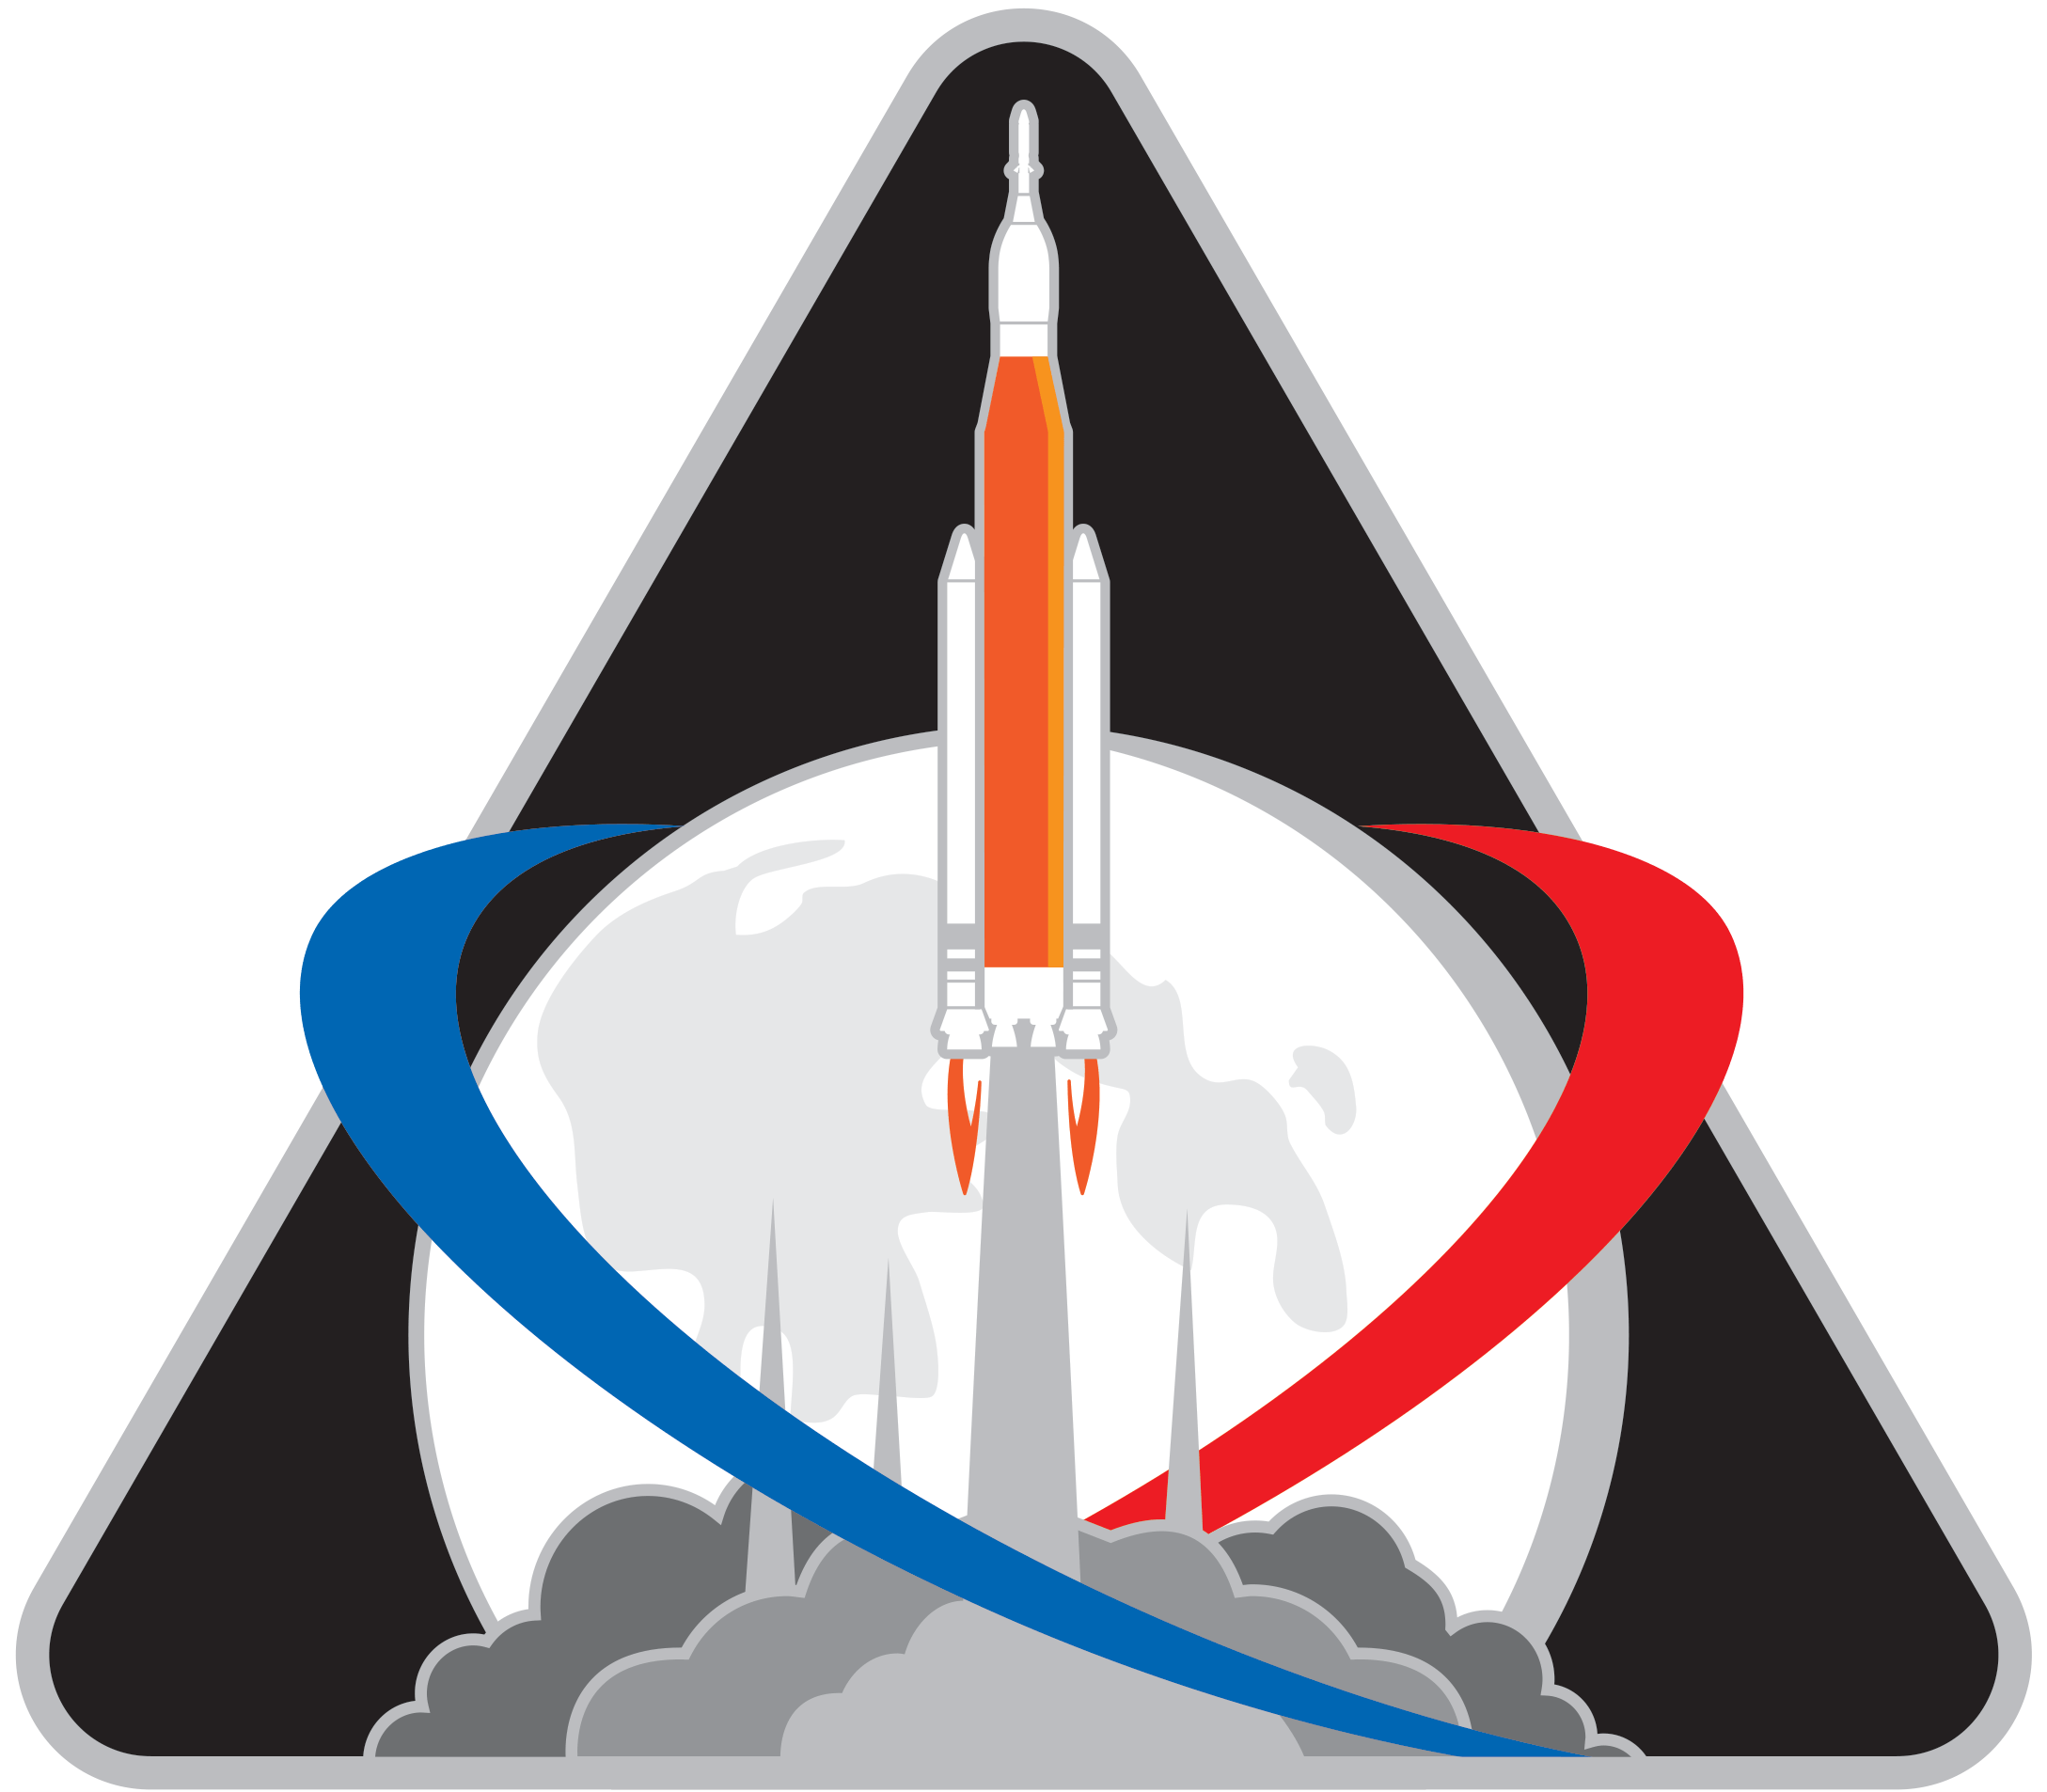 NASA Mission Logo - NASA Reveals The Exploration Mission 1 Logo Patch & Mission Identifier